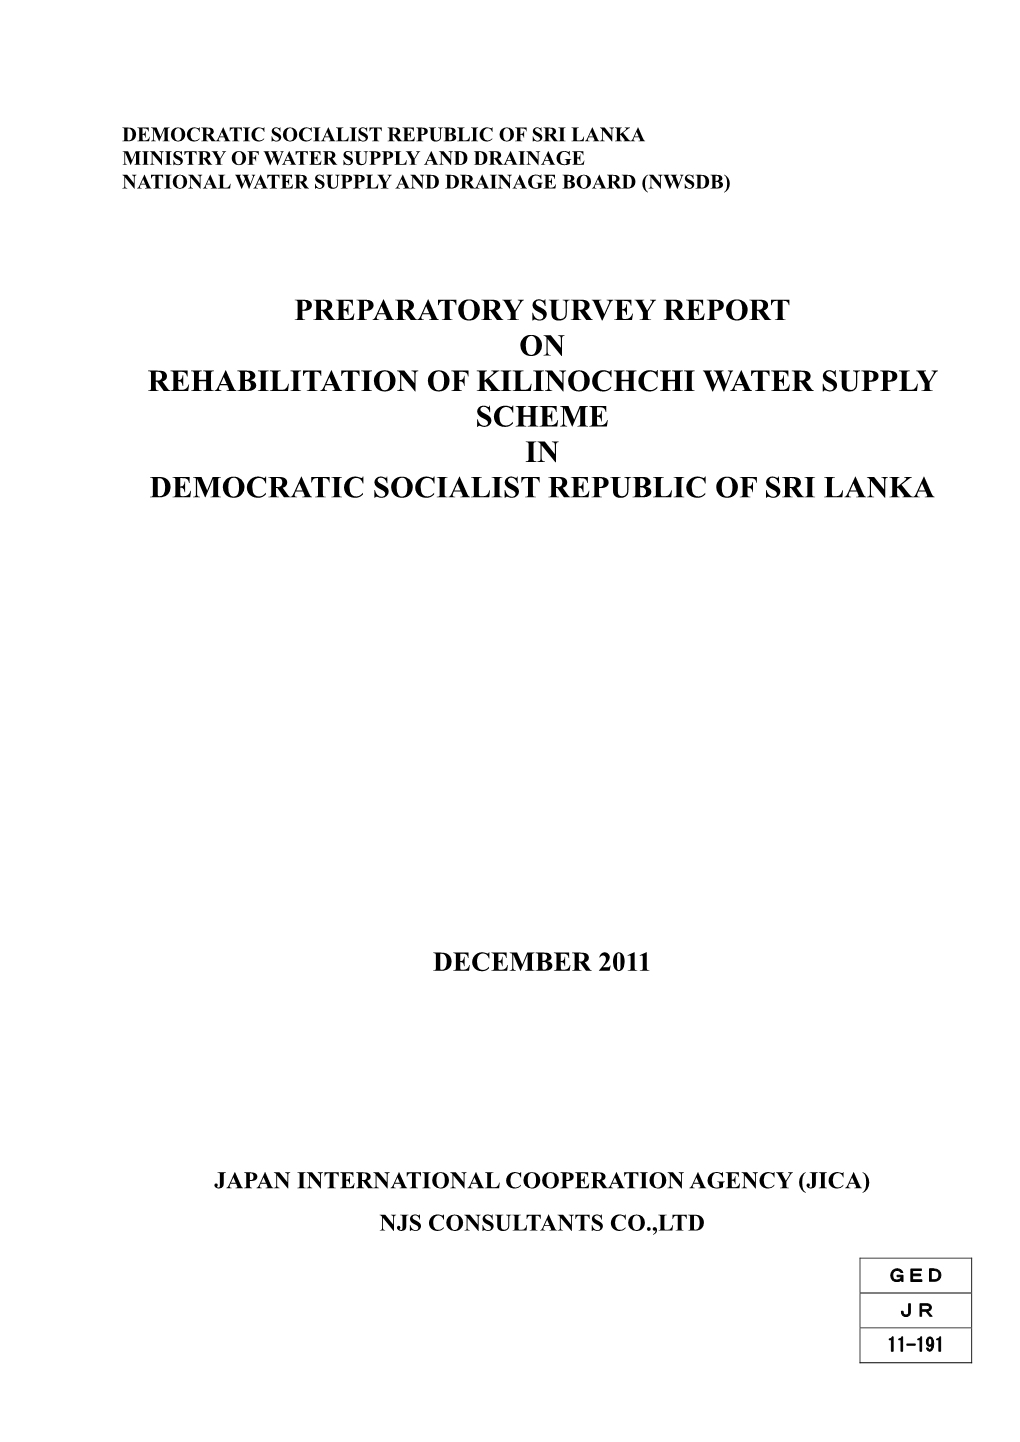 Preparatory Survey Report on Rehabilitation of Kilinochchi Water Supply Scheme in Democratic Socialist Republic of Sri Lanka